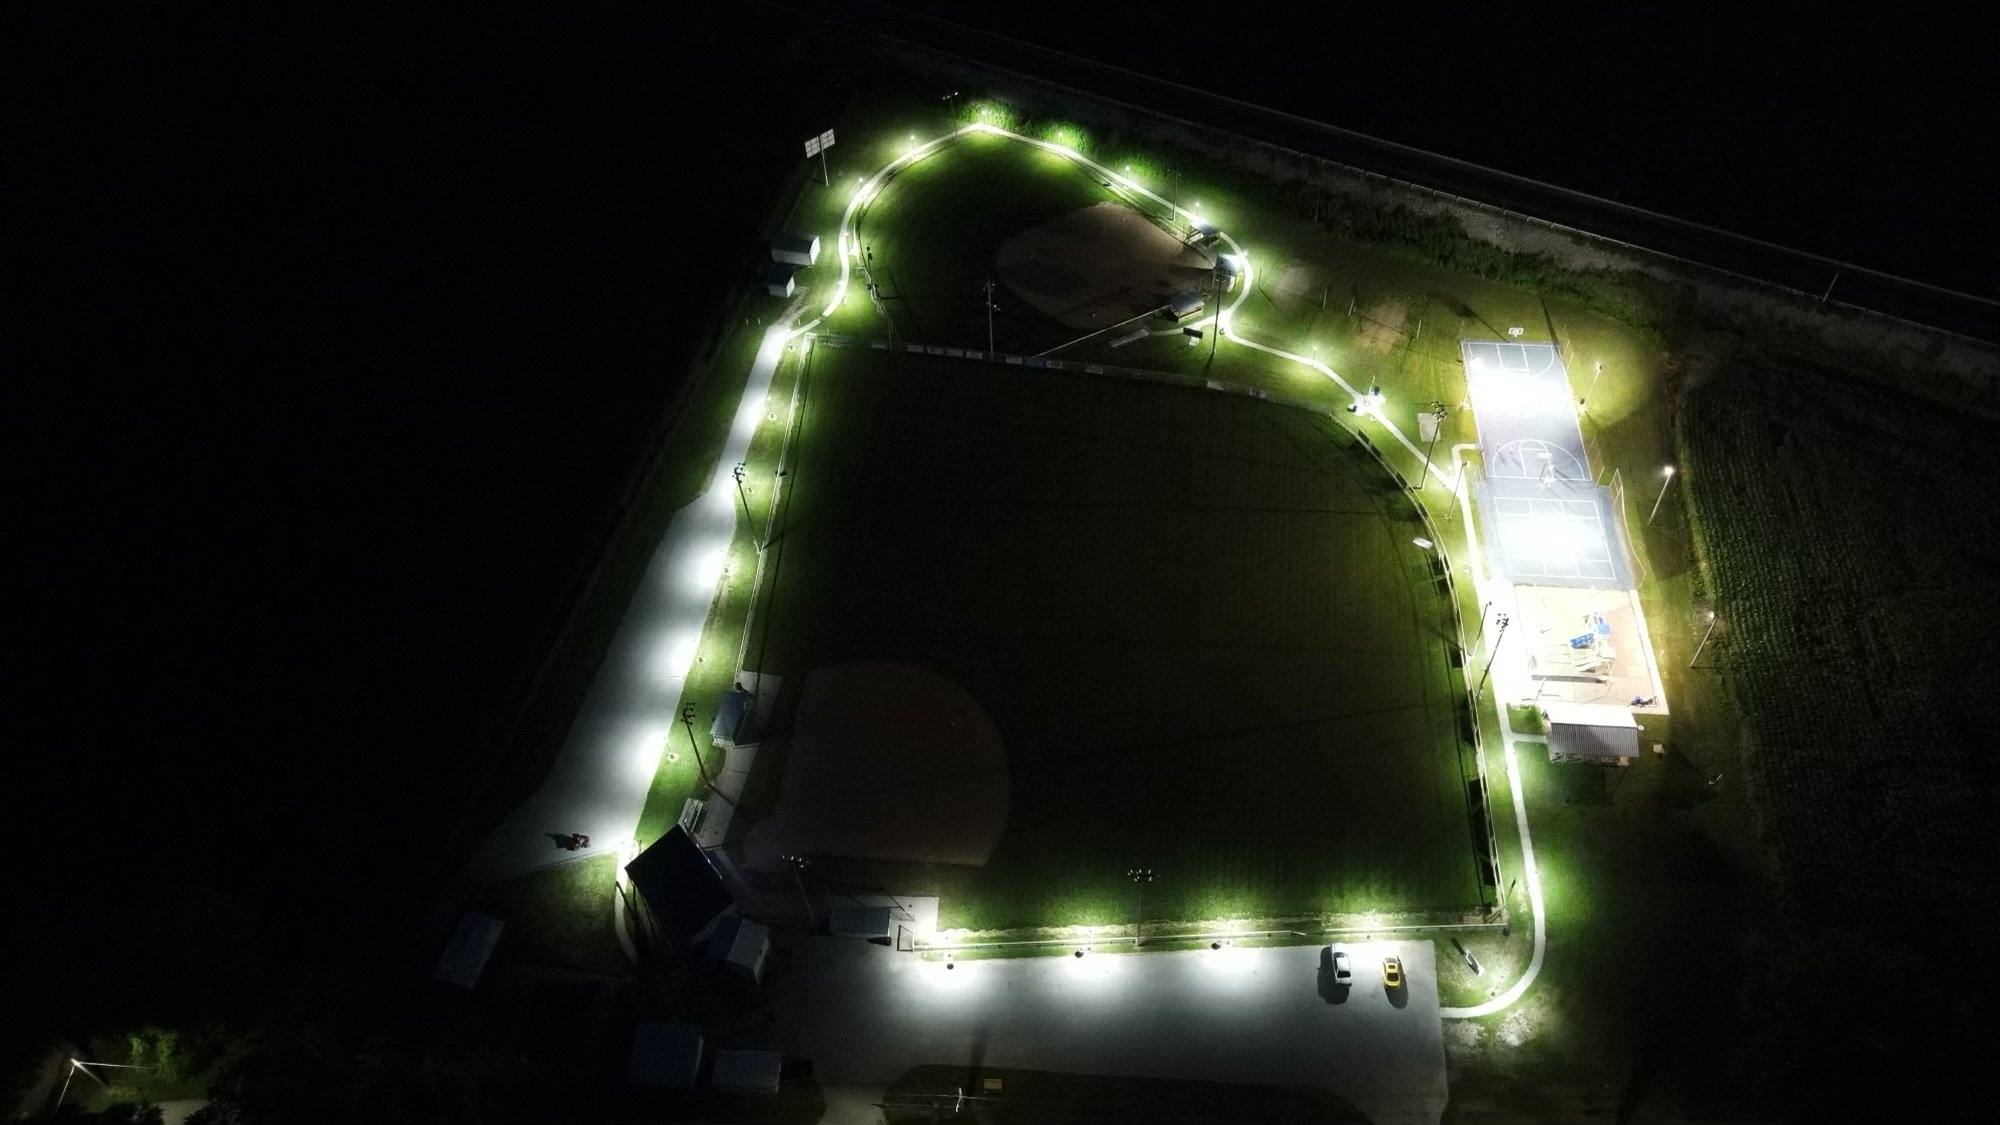 23 MC Lilly Leadership Town of Shoals Ballpark lighting at night 2.jpg